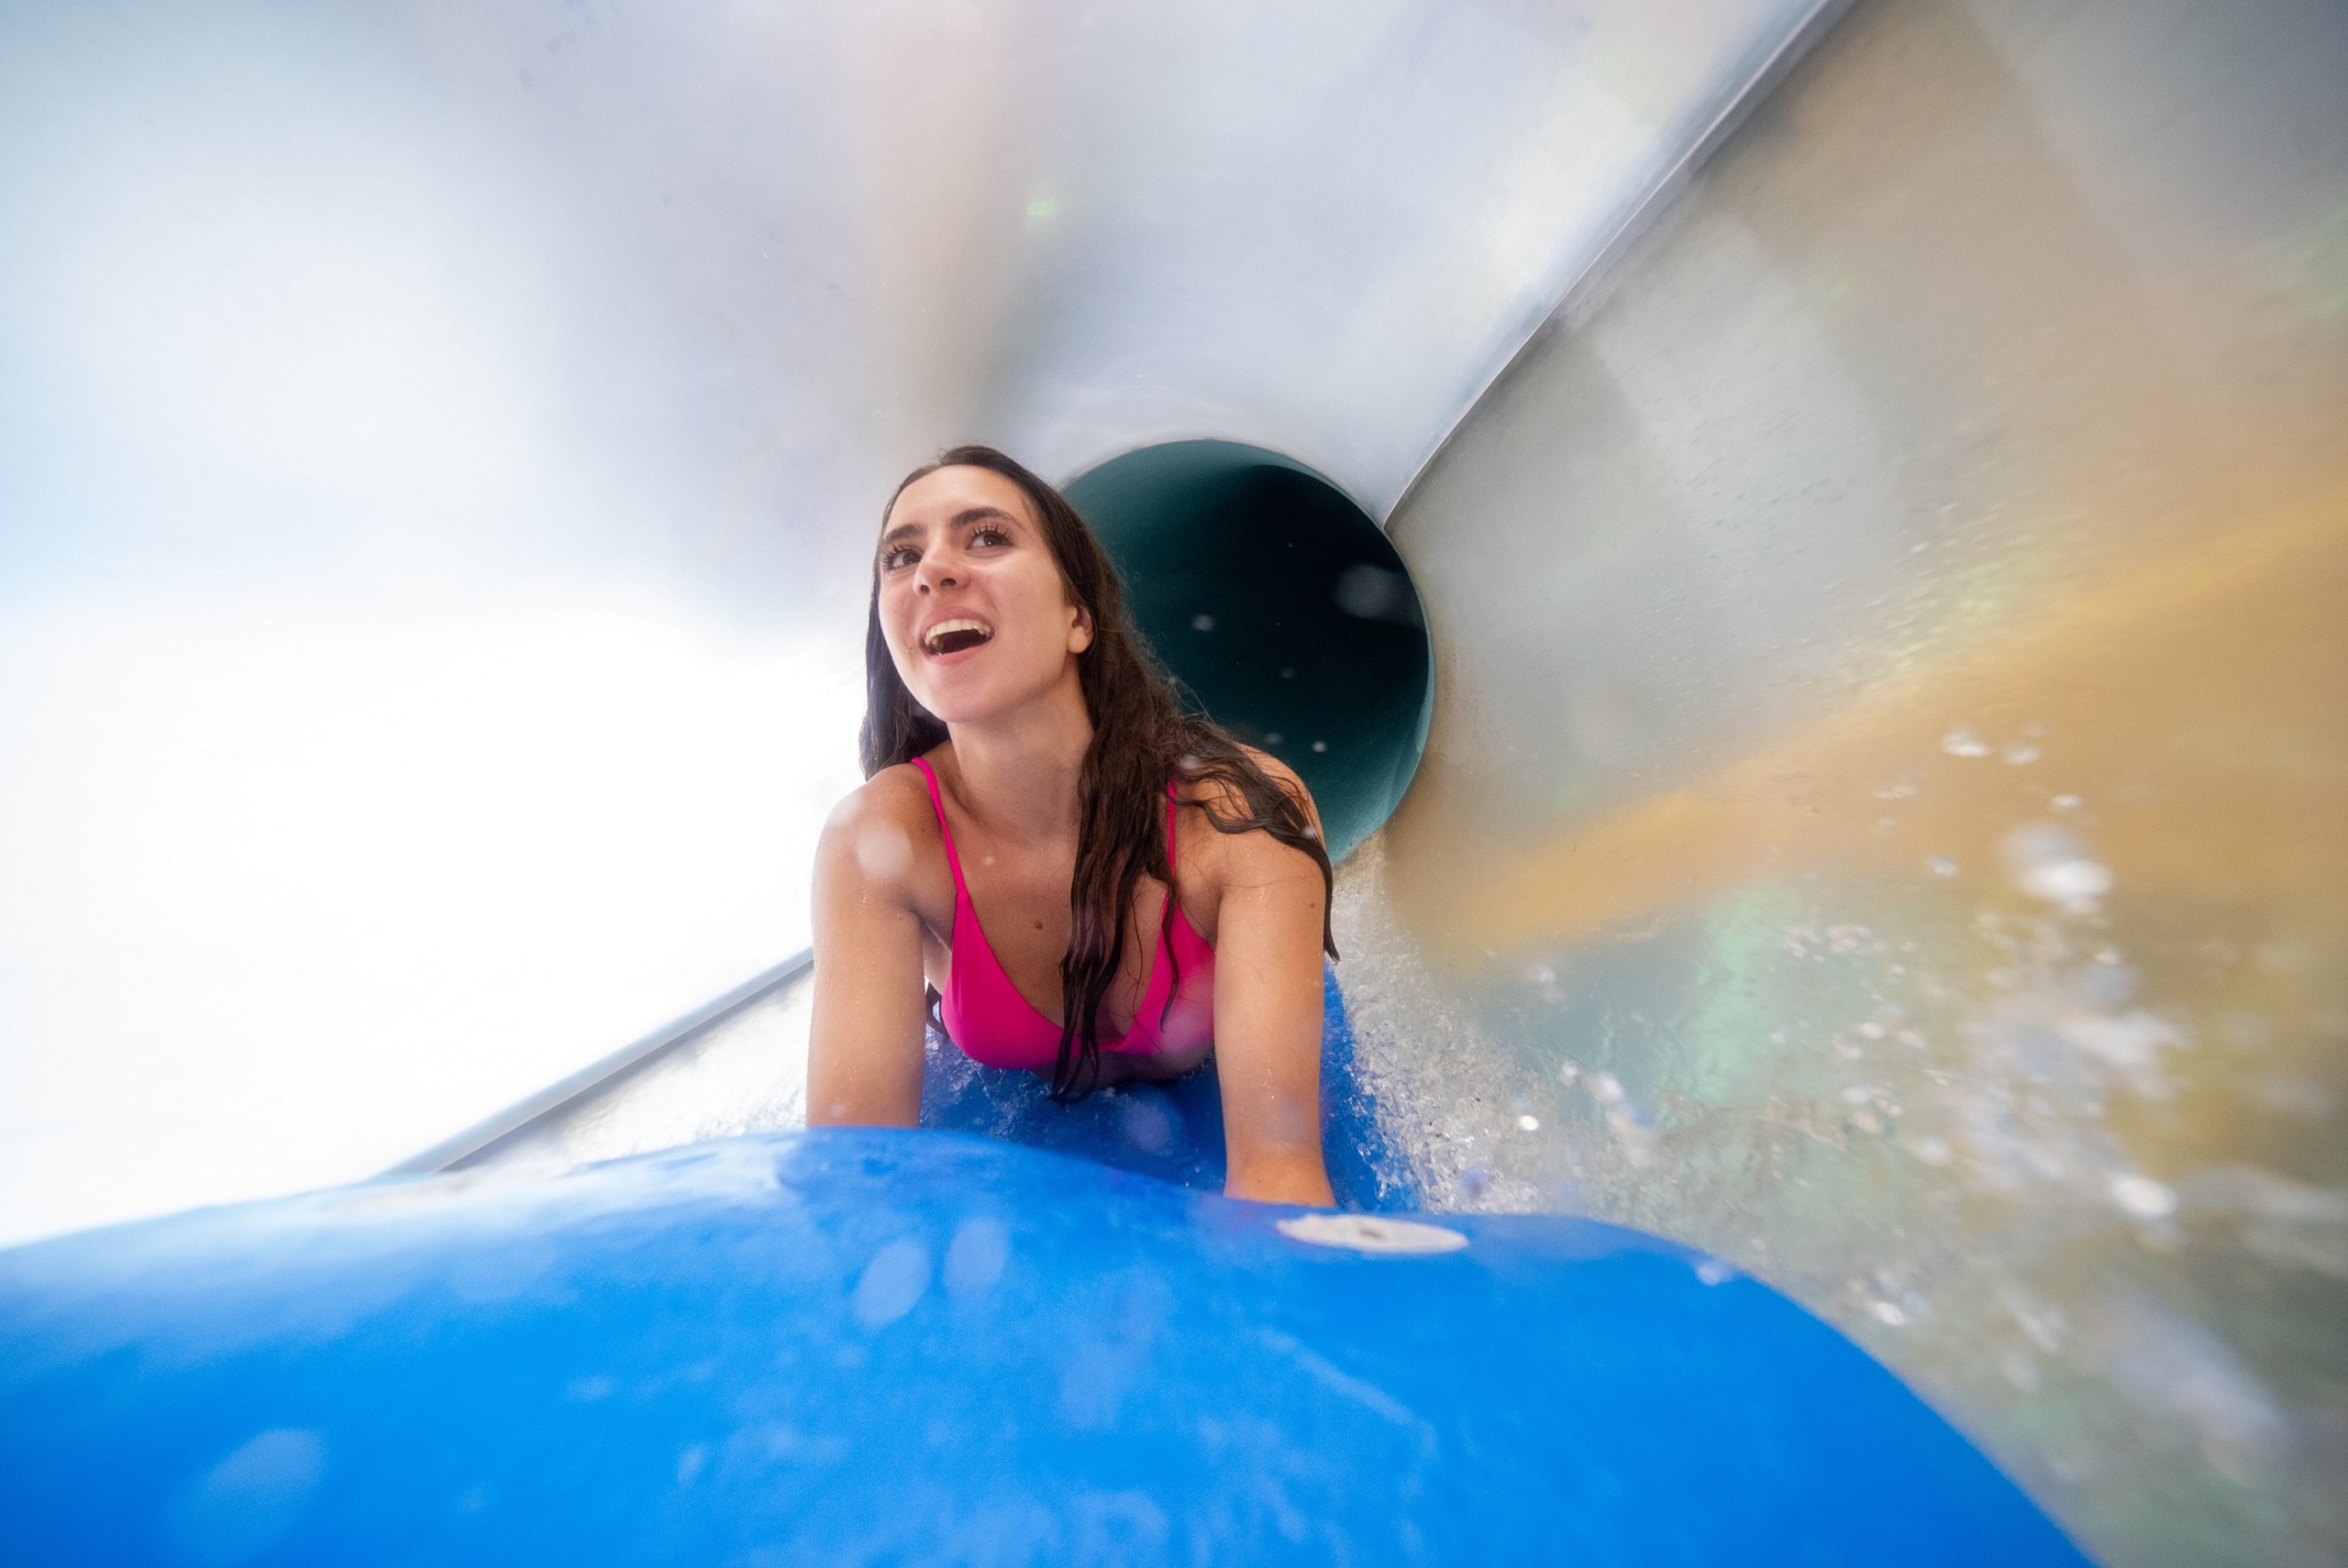 Woman on a mat inside water slide flume